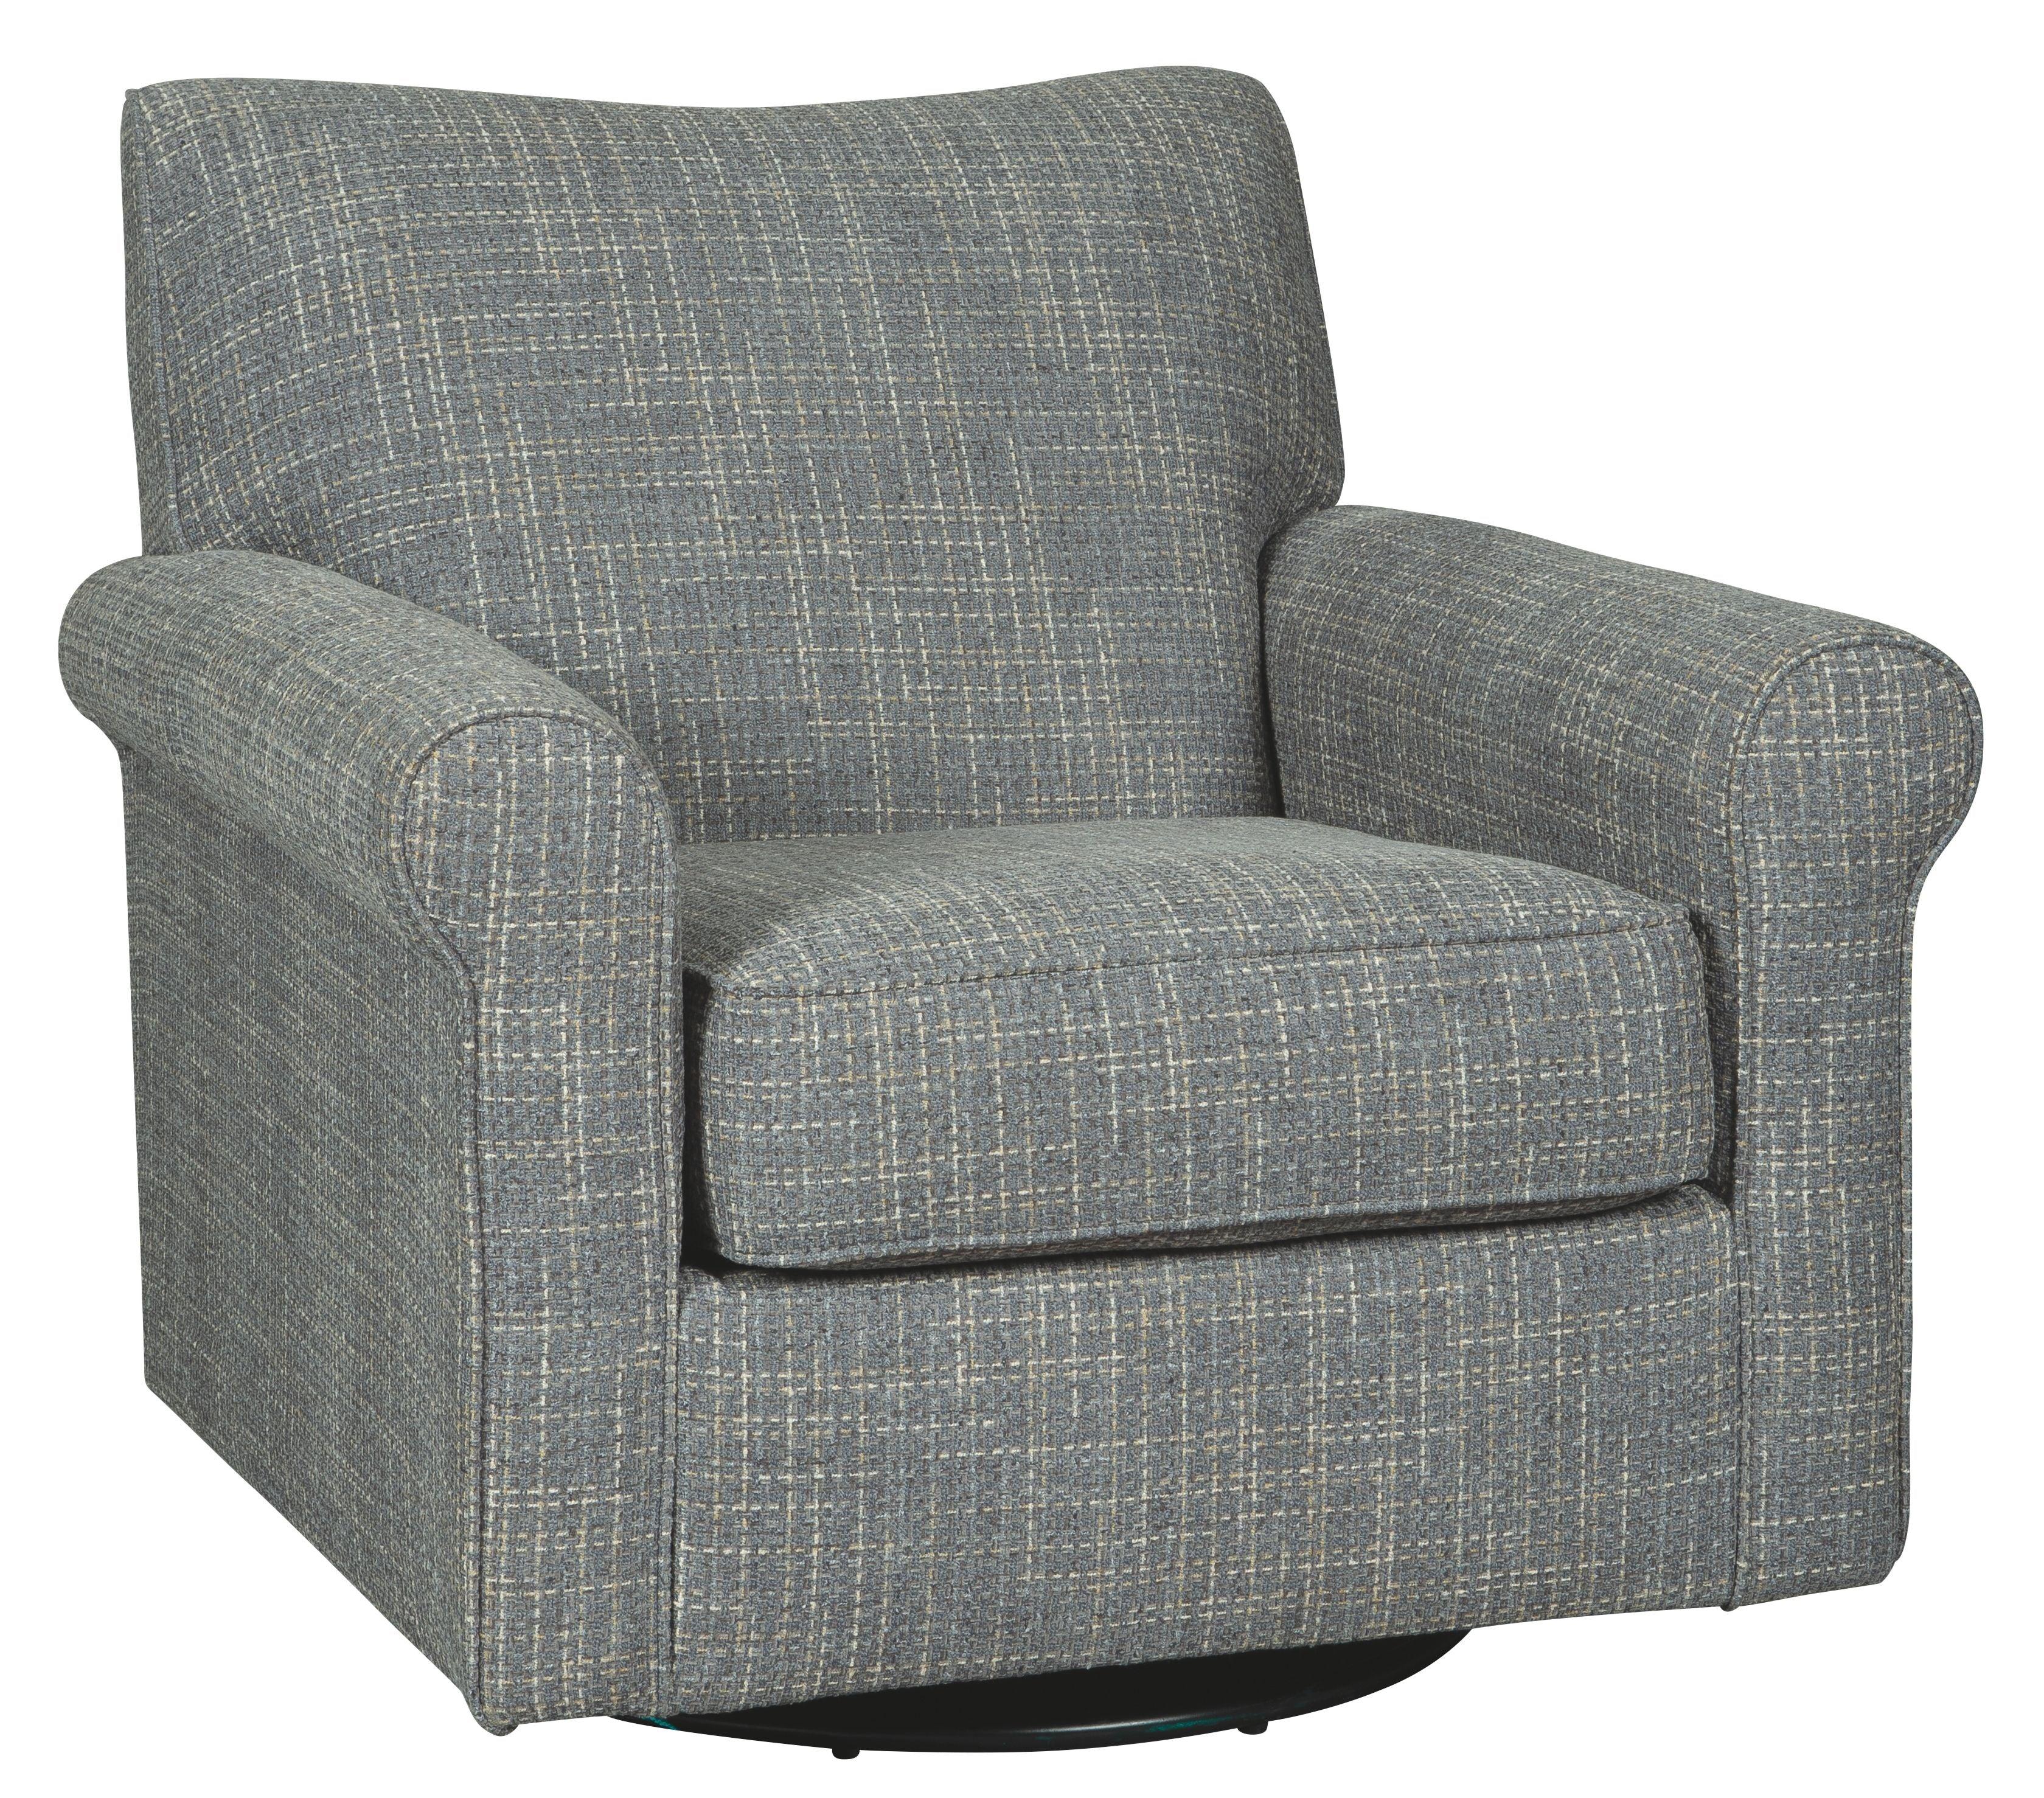 Ashley Furniture - Renley - Ash - Swivel Glider Accent Chair - 5th Avenue Furniture